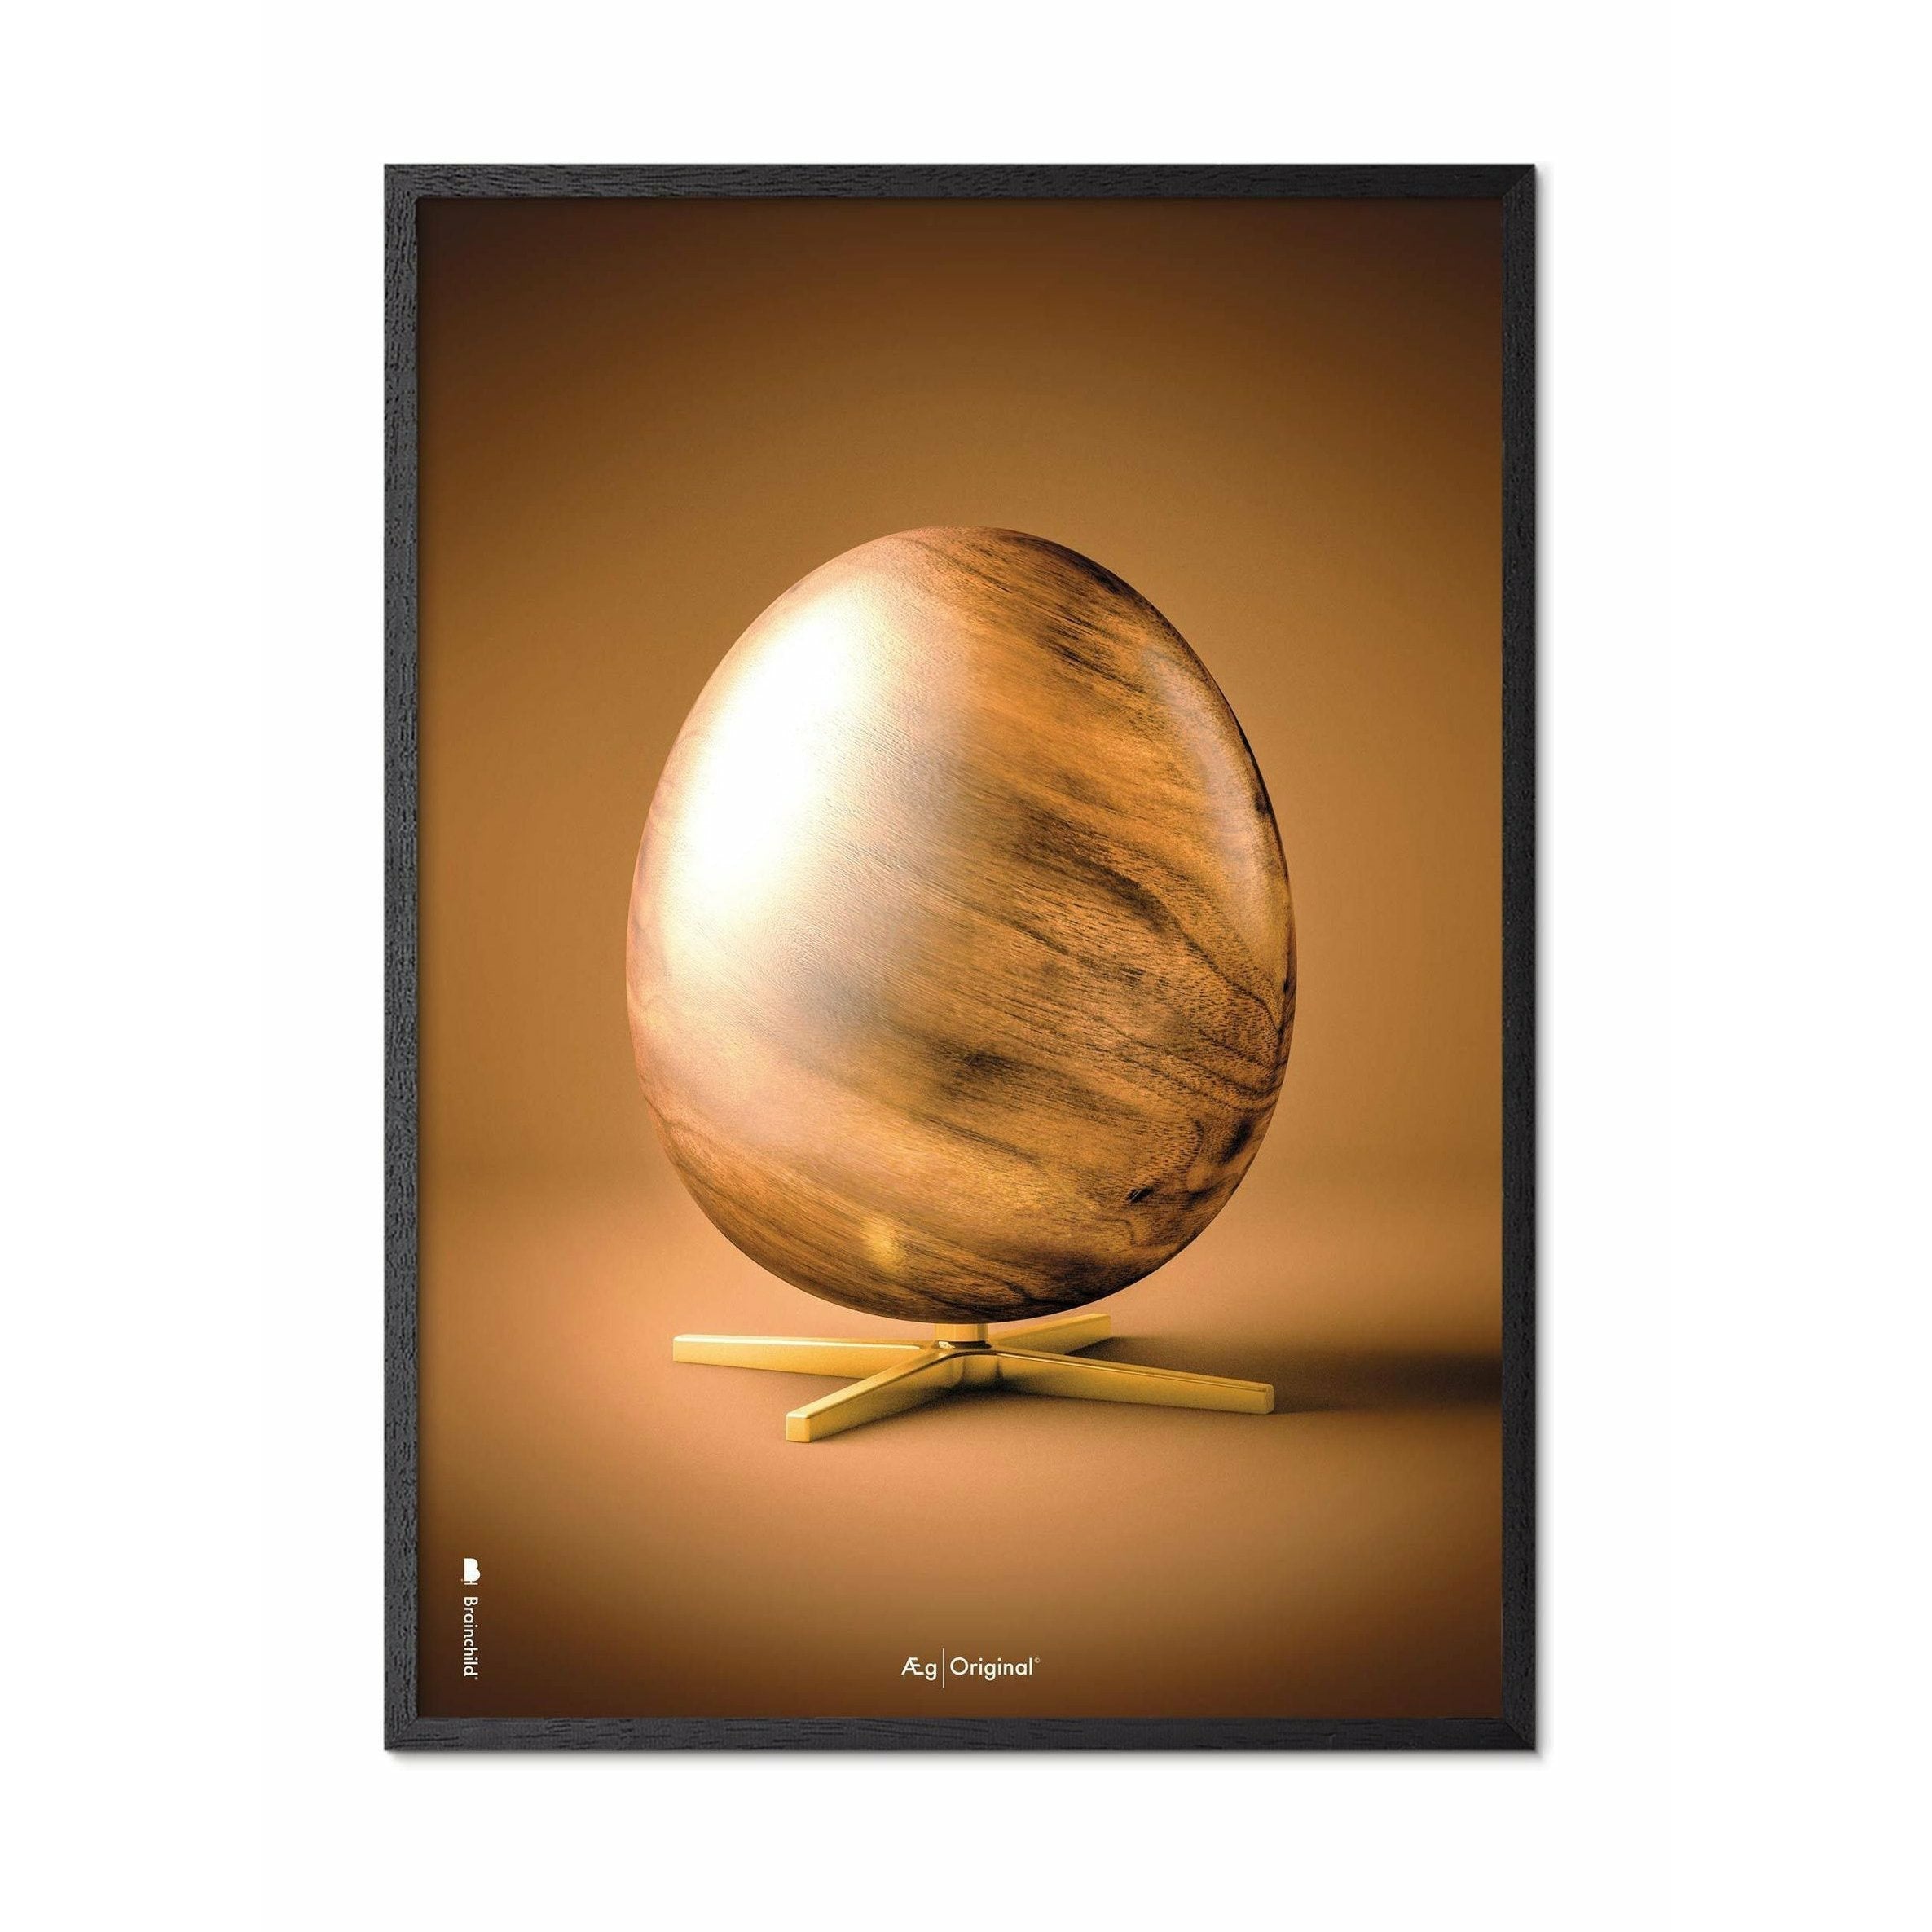 Póster de figuras de huevo de creación, marco hecho de madera lacada negra de 30x40 cm, marrón